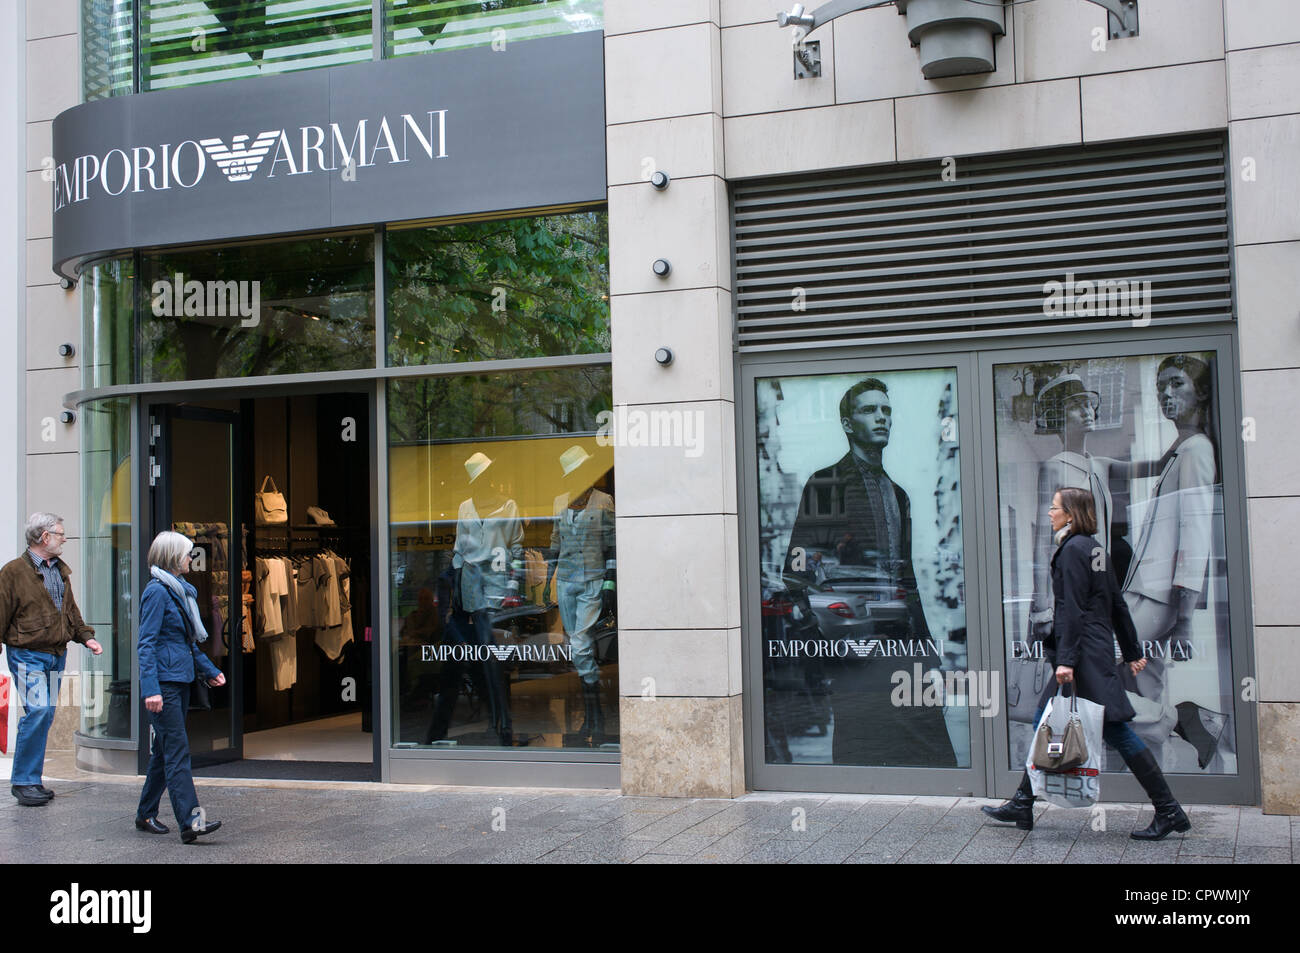 Plak opnieuw Primitief Regenachtig Emporio Armani clothes store Dusseldorf Germany Stock Photo - Alamy